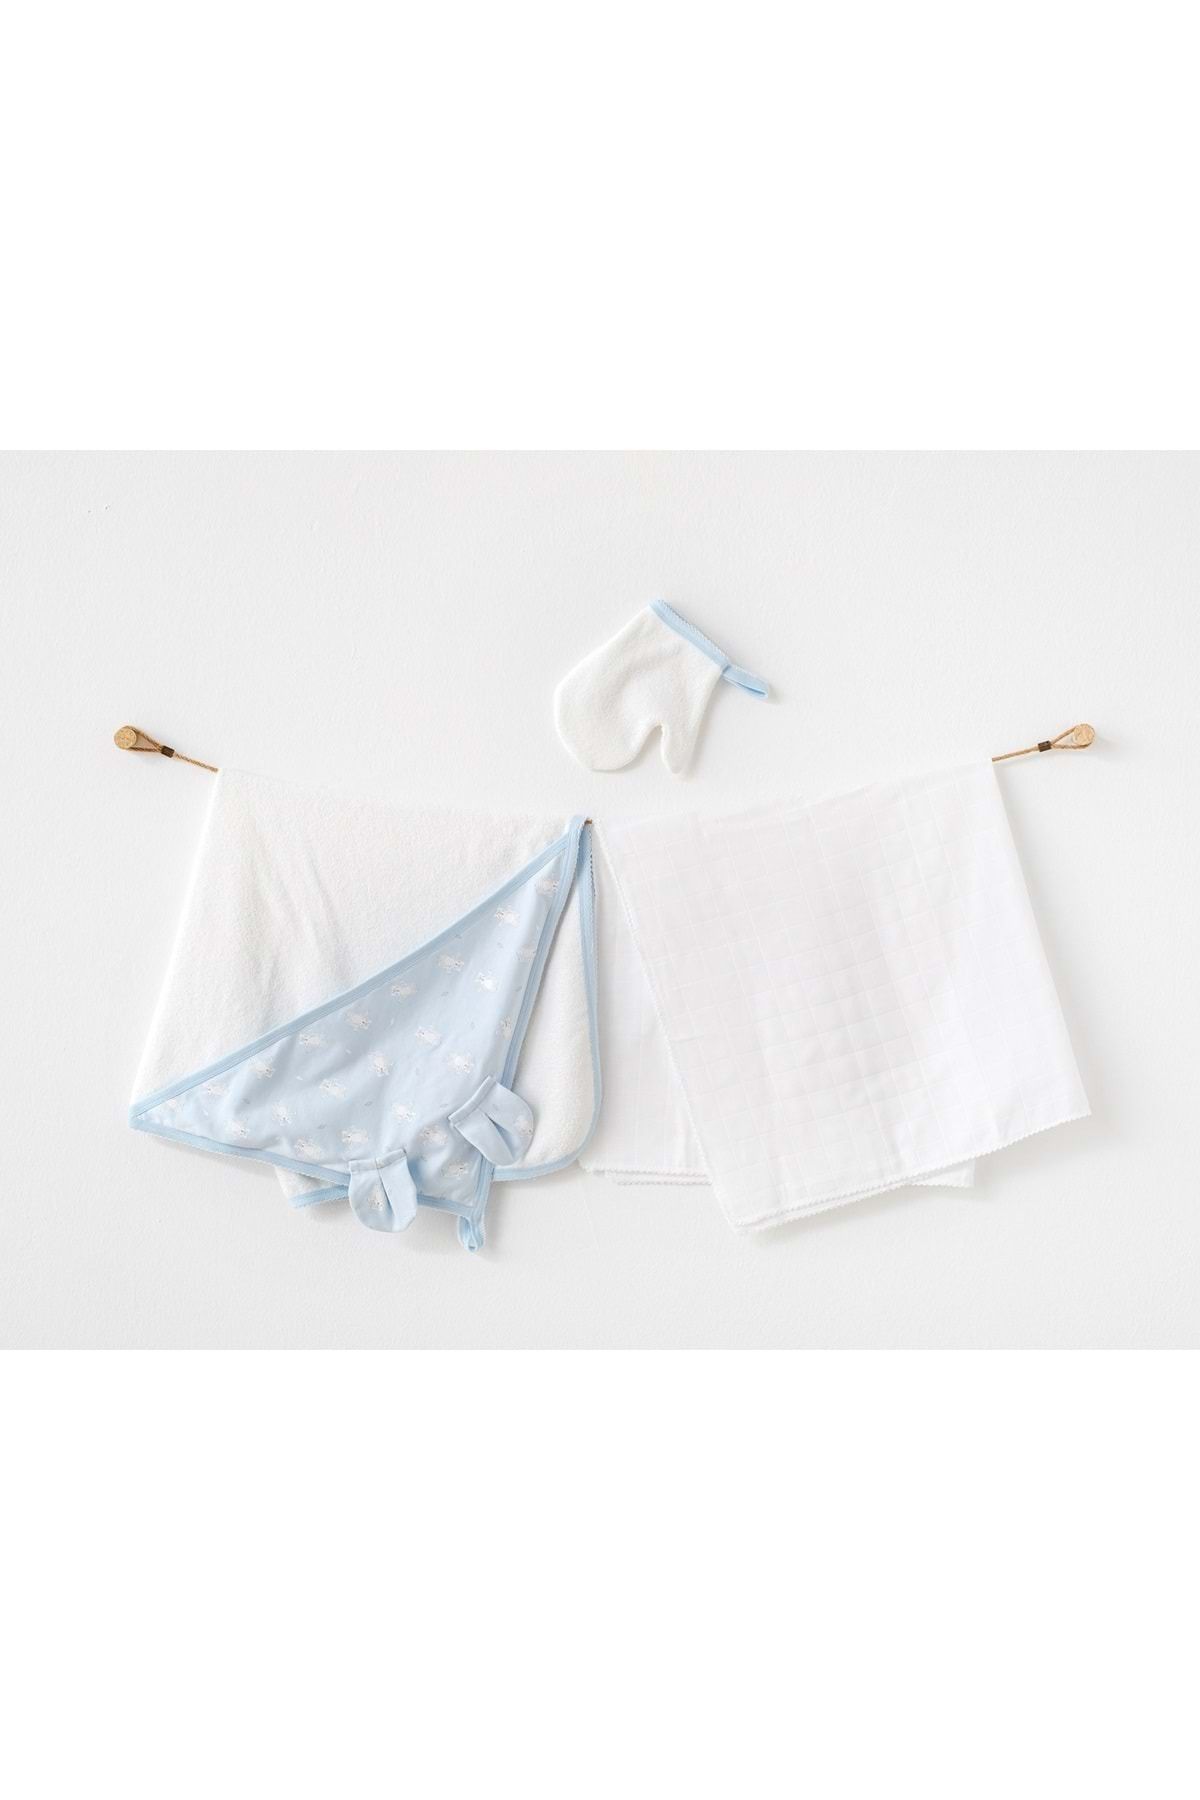 Andy Wawa Bebek Havlu Takım 3pcs Set Towel Muslın Set Beyaz Mavi